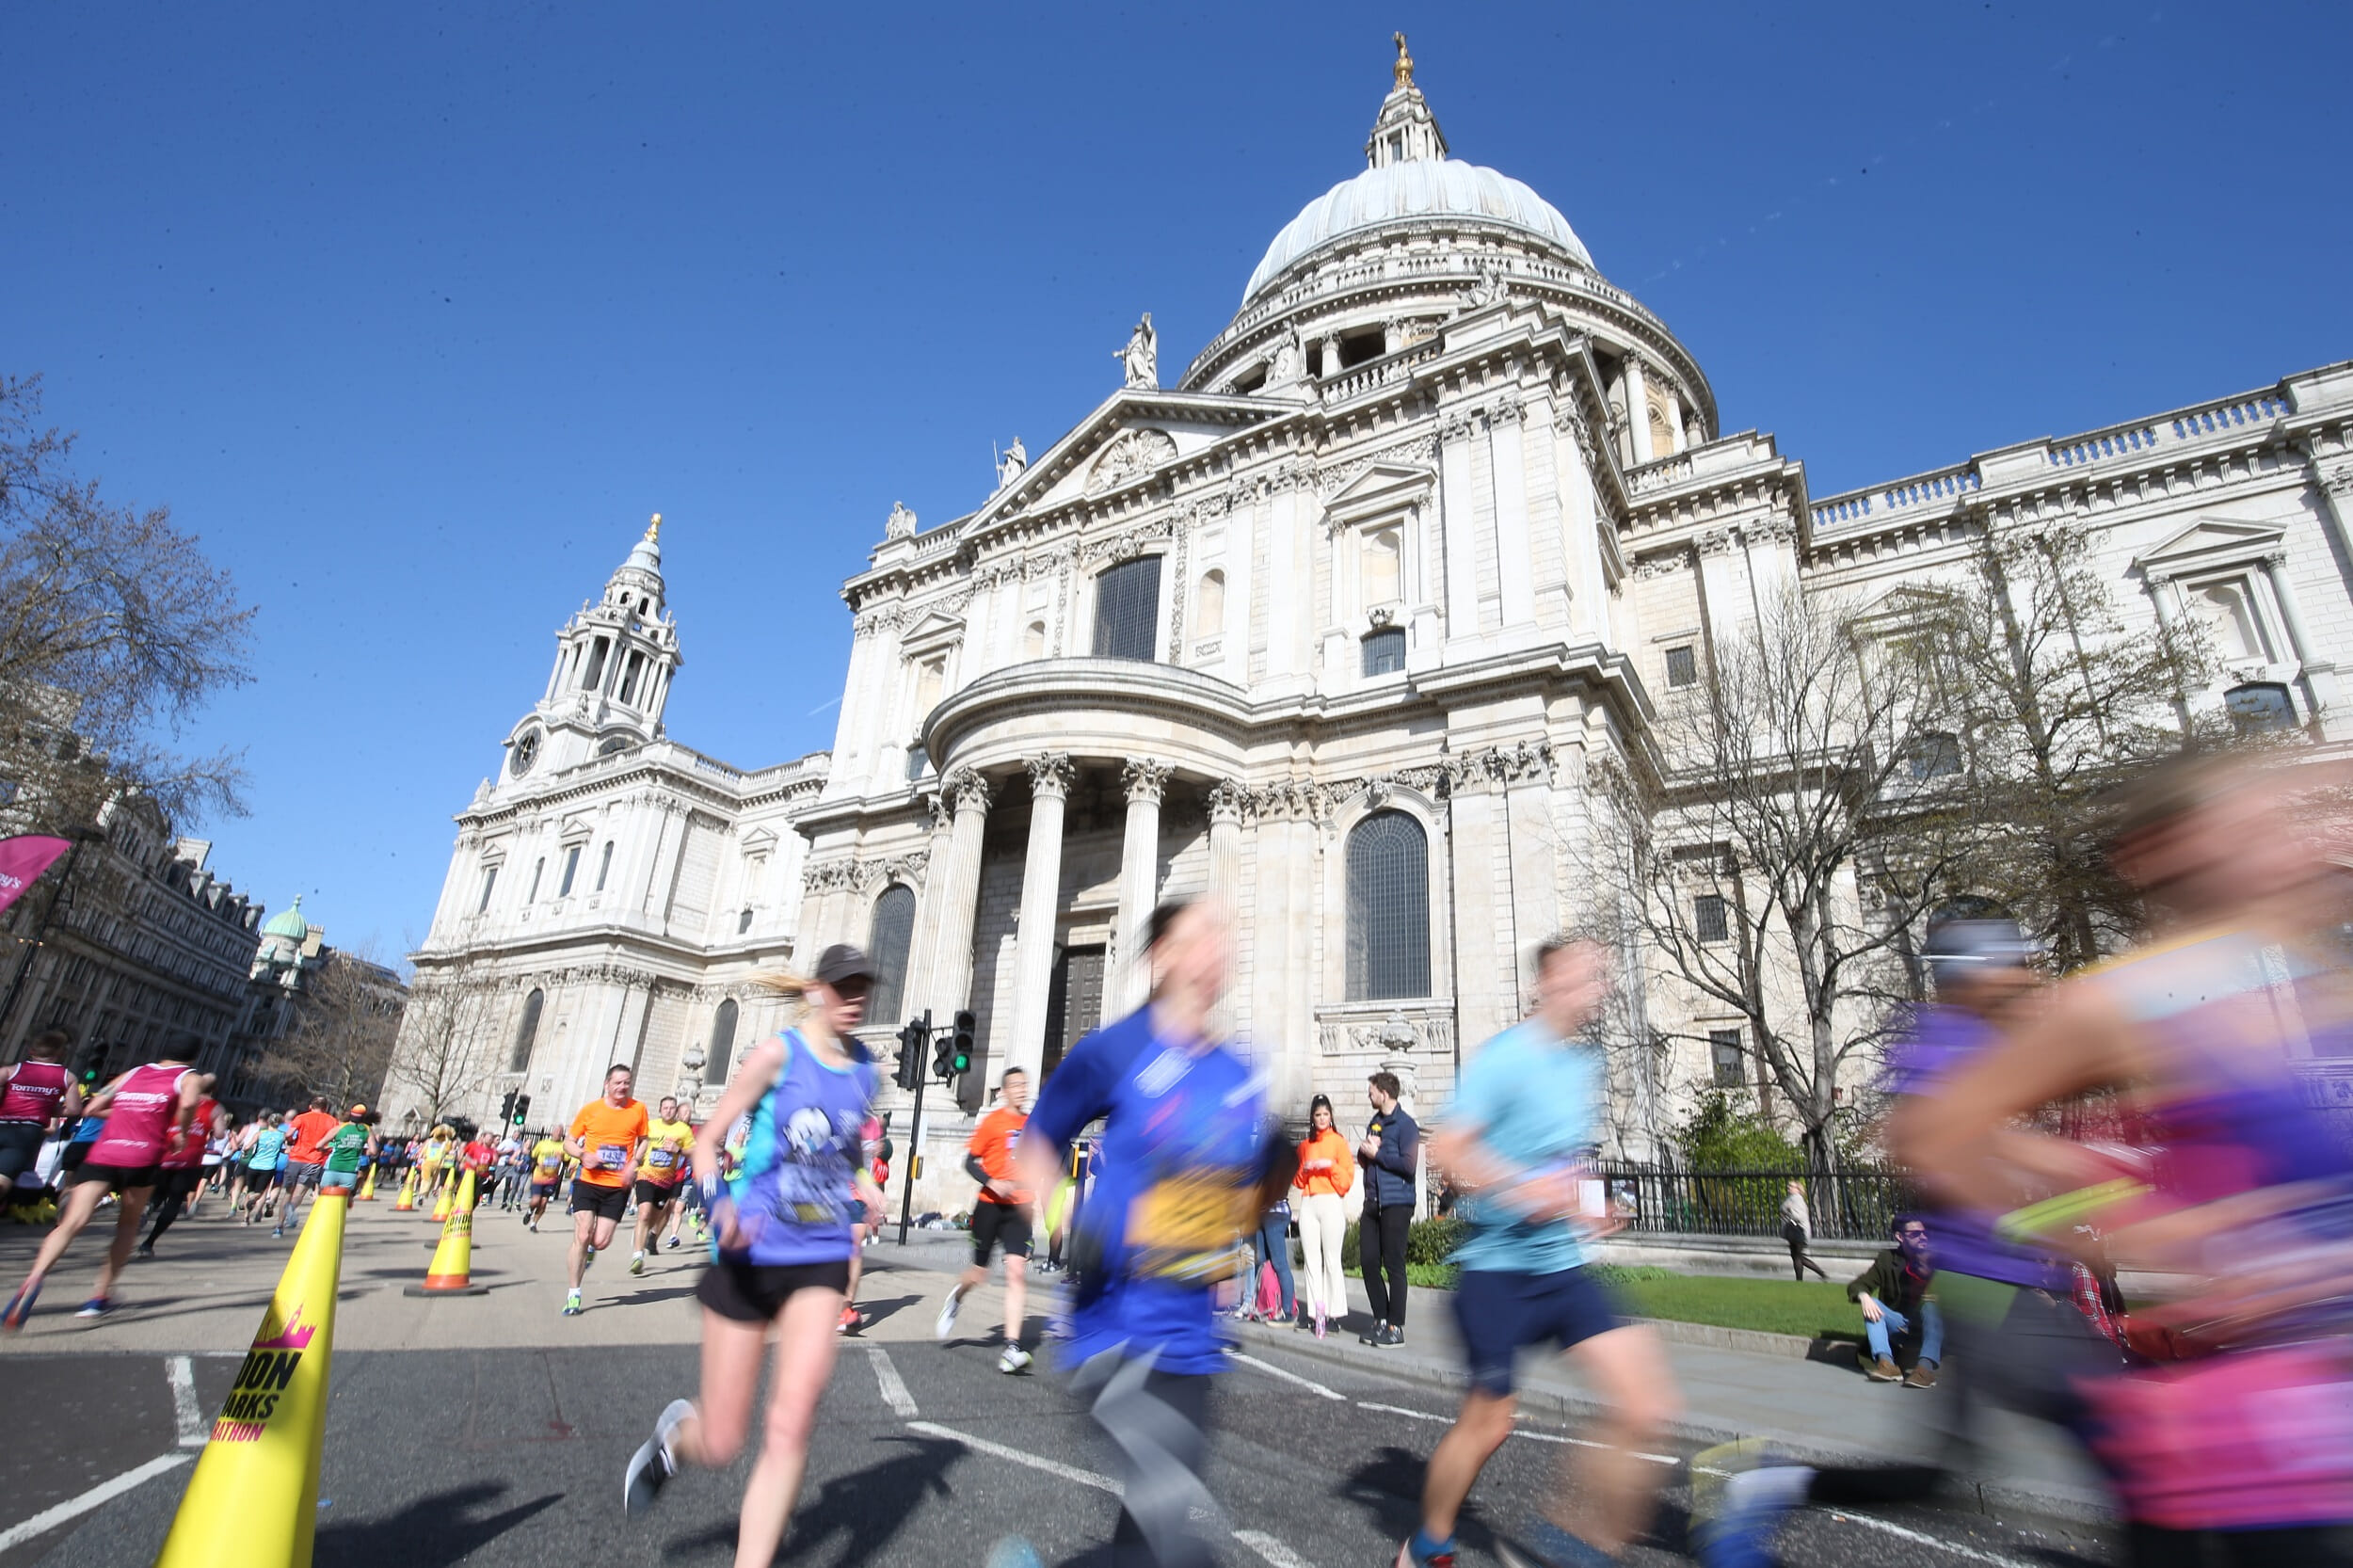 Explore London's iconic landmarks in this half marathon